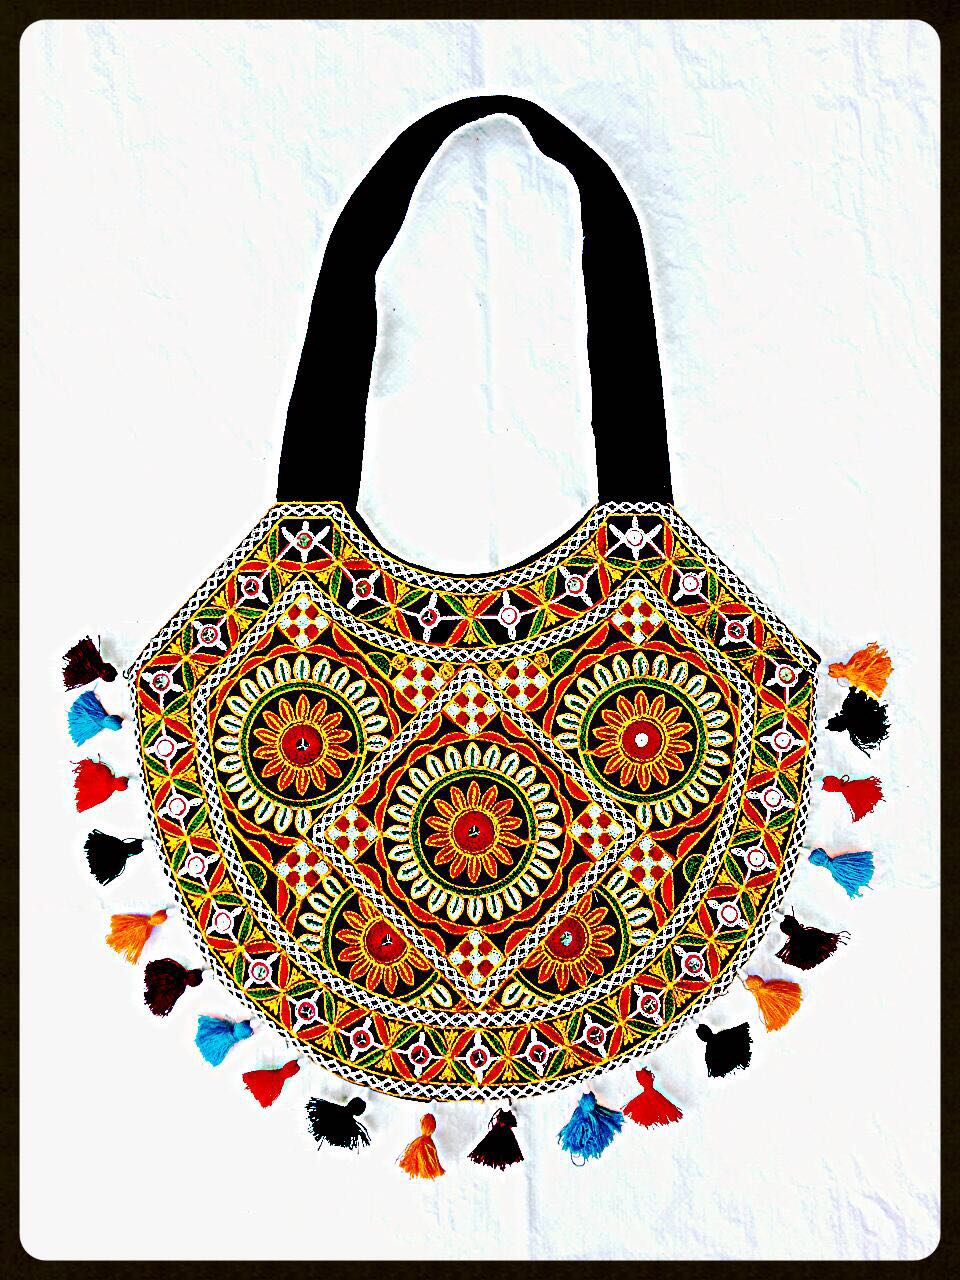 Paramhandicrafts: Handicraft replicated Embroidery bags